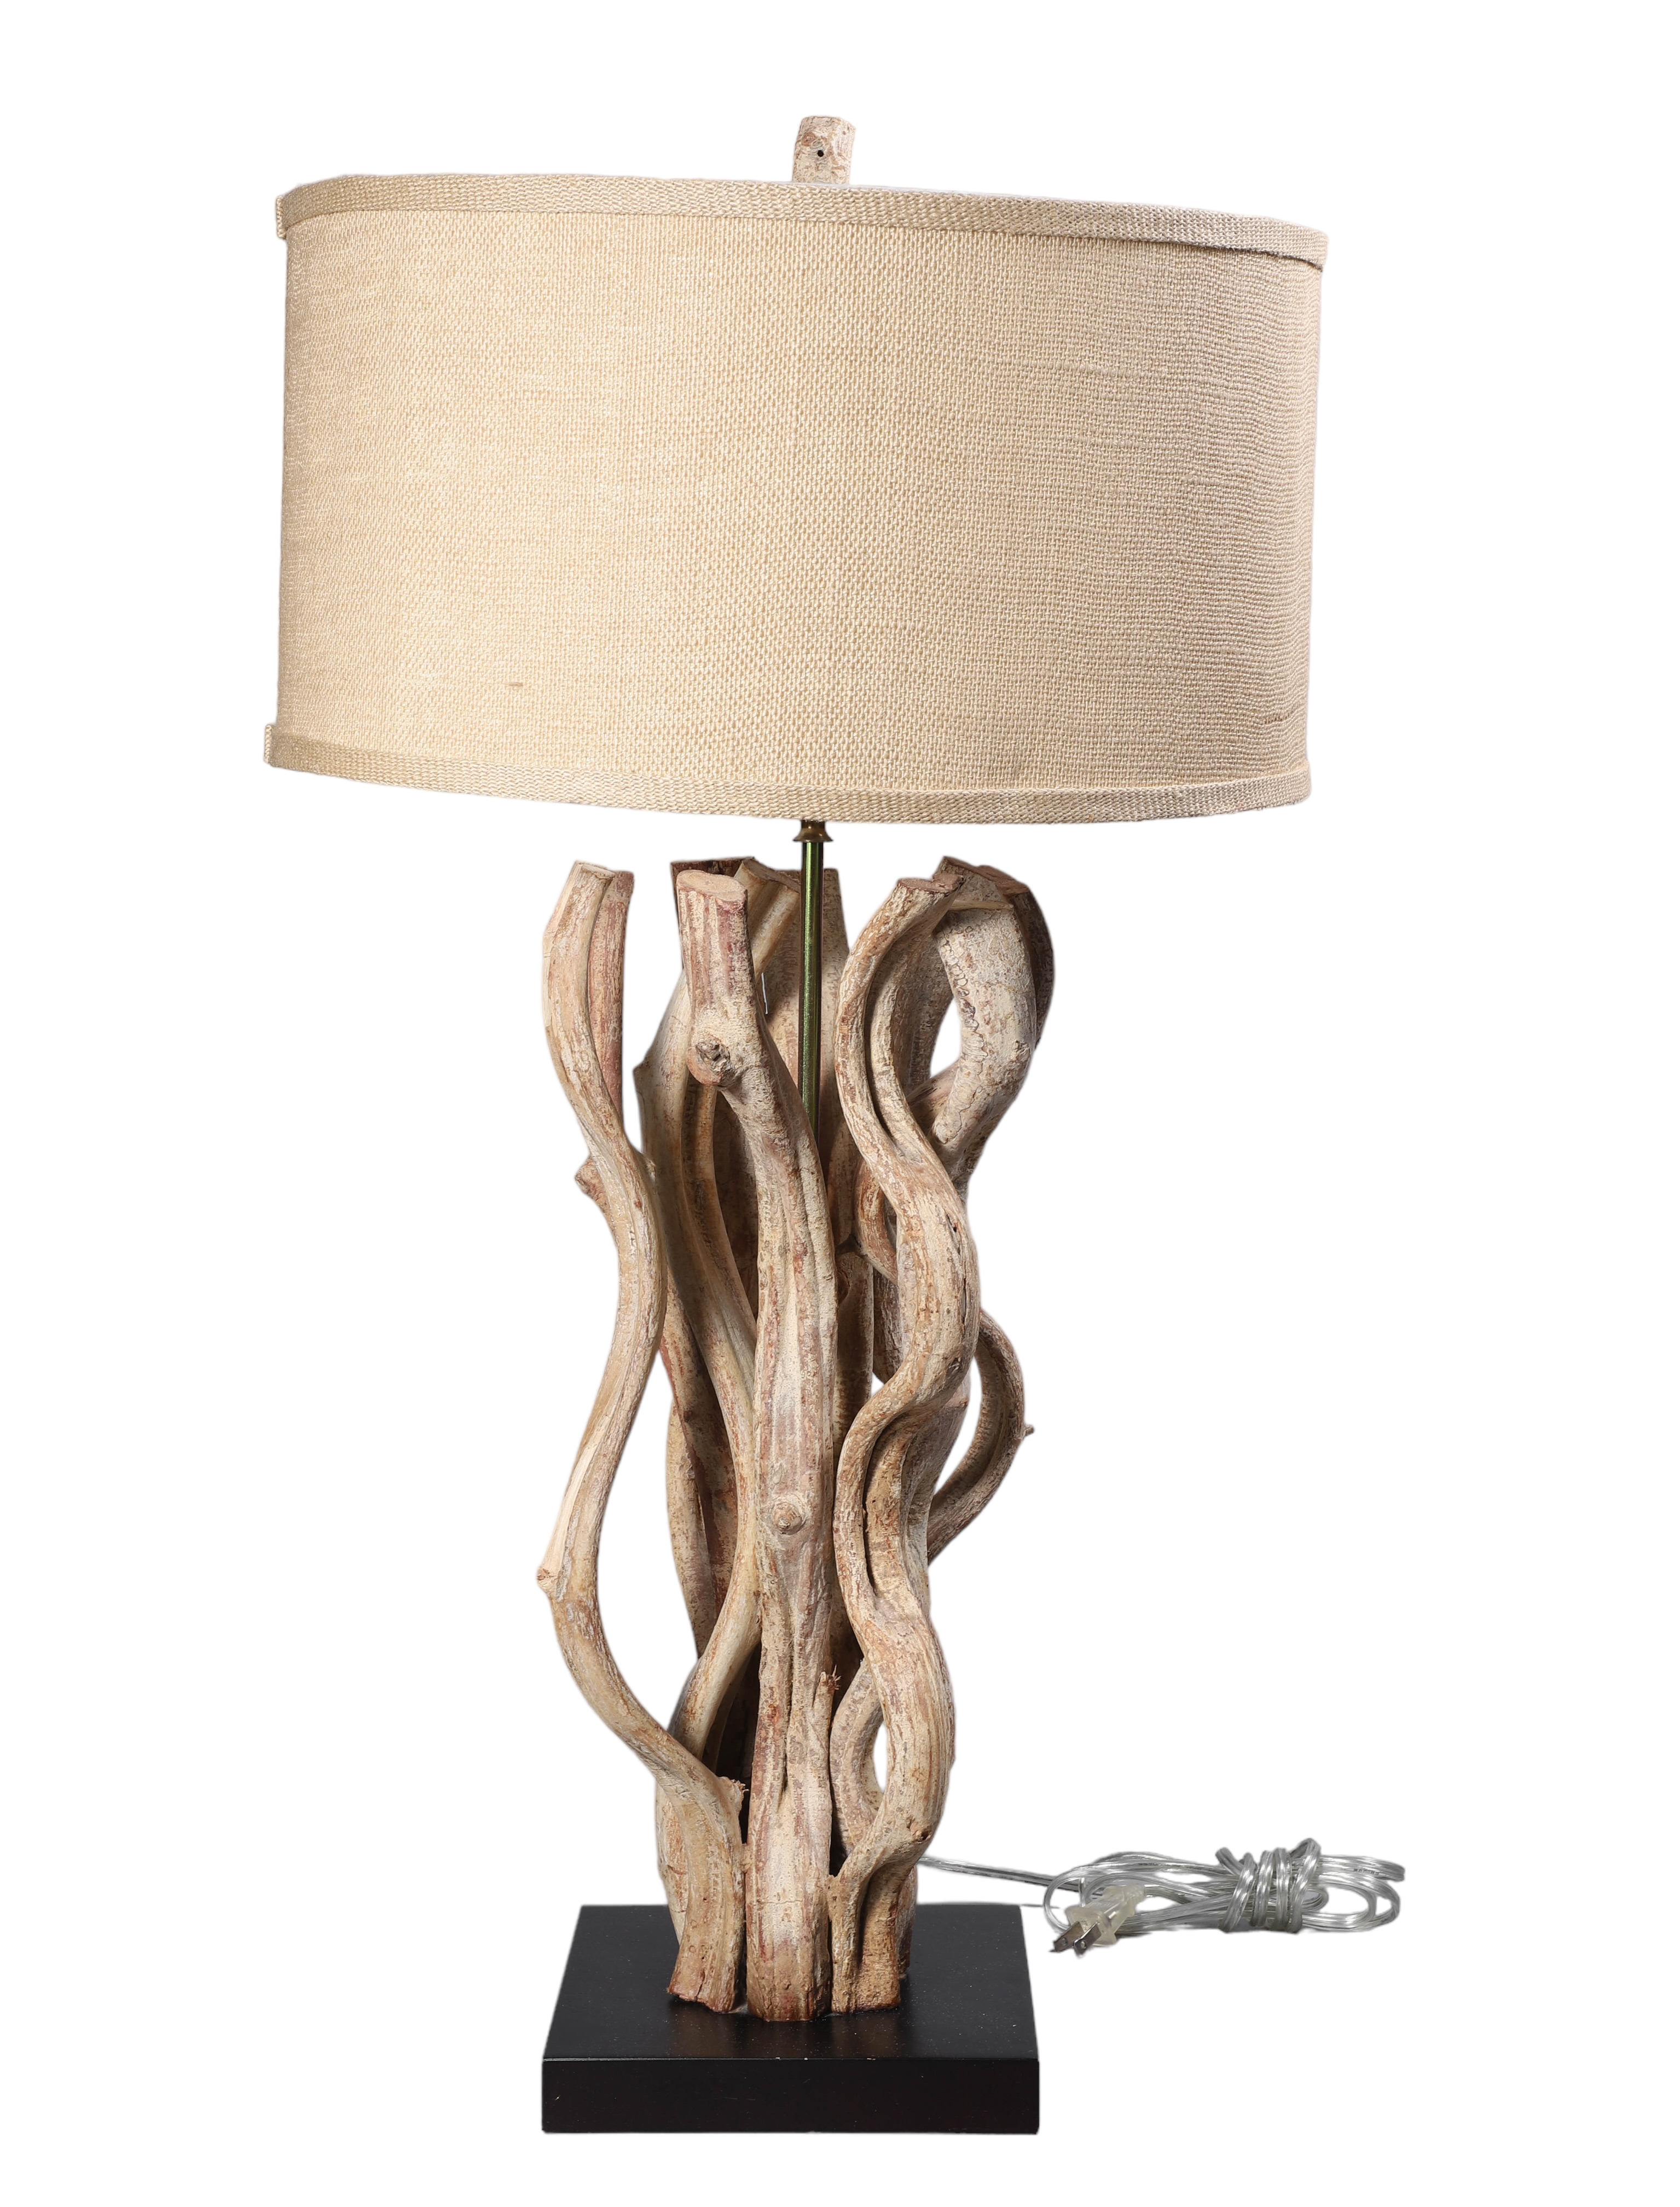 Bundled driftwood table lamp, canvas